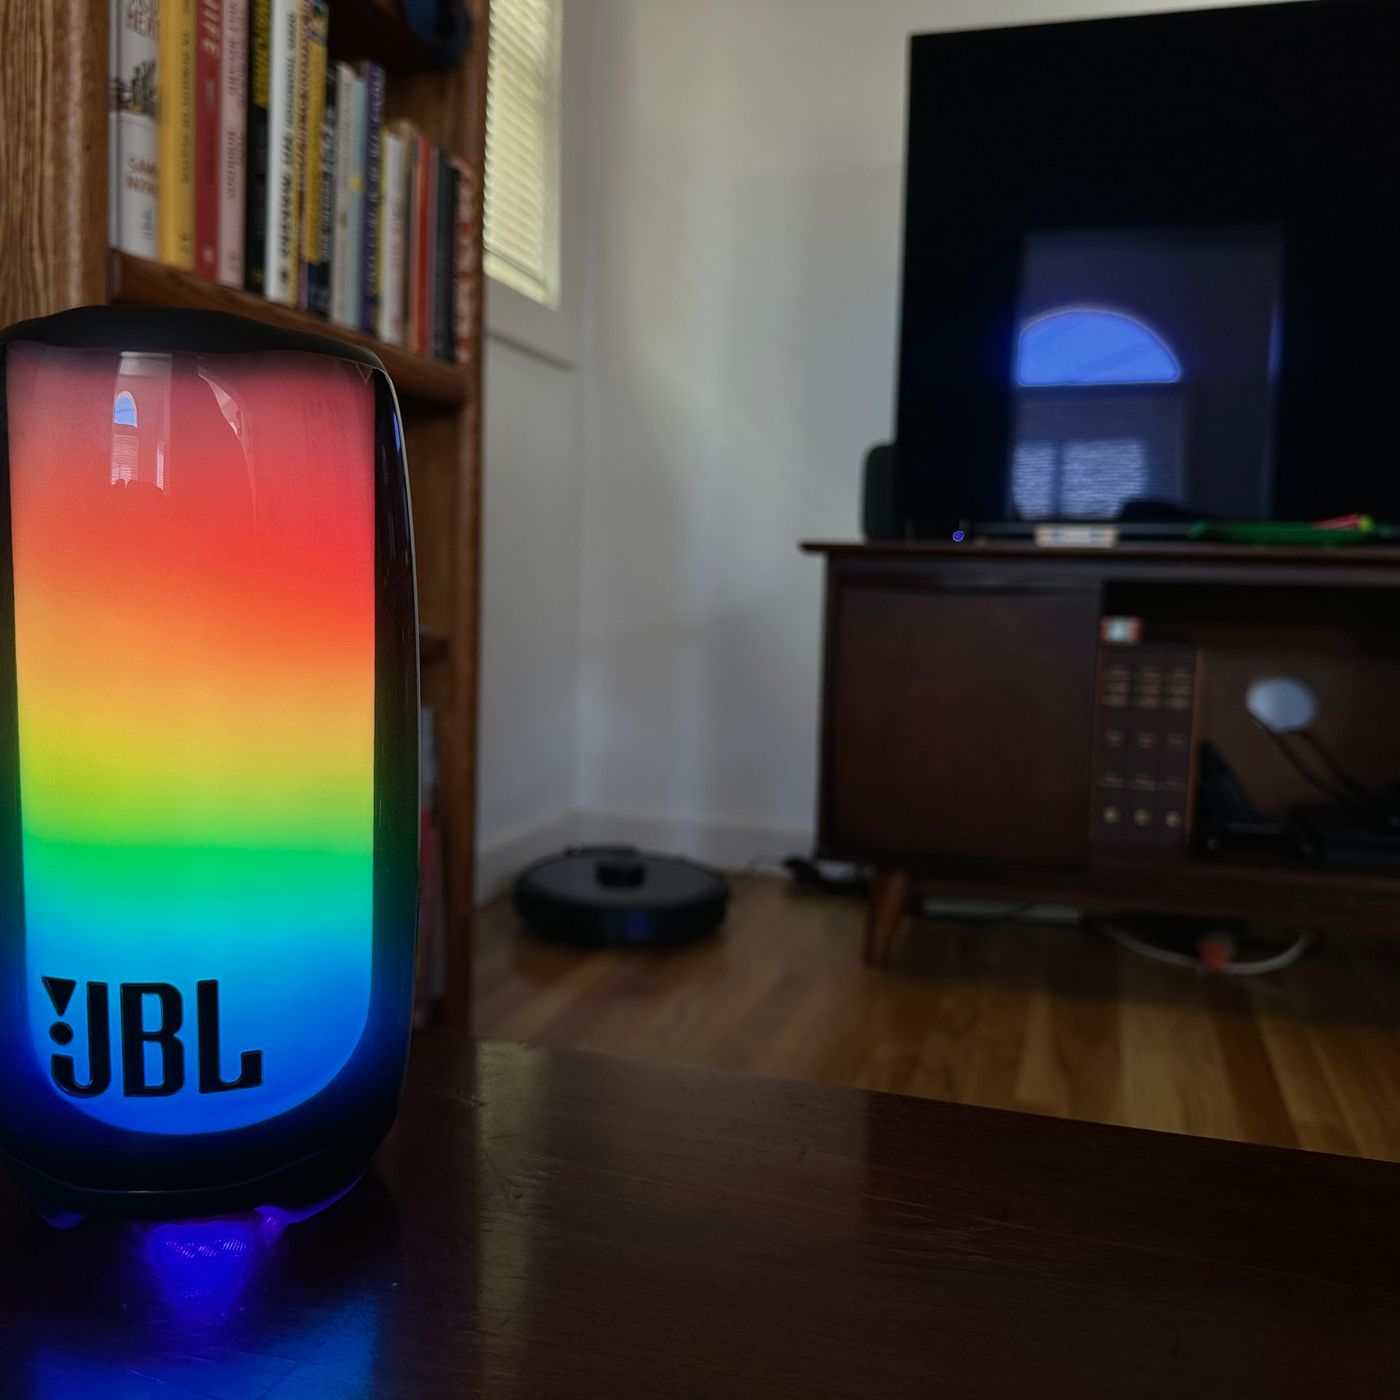 JBL Pulse 5 Bluetooth Speaker Review - STG Play